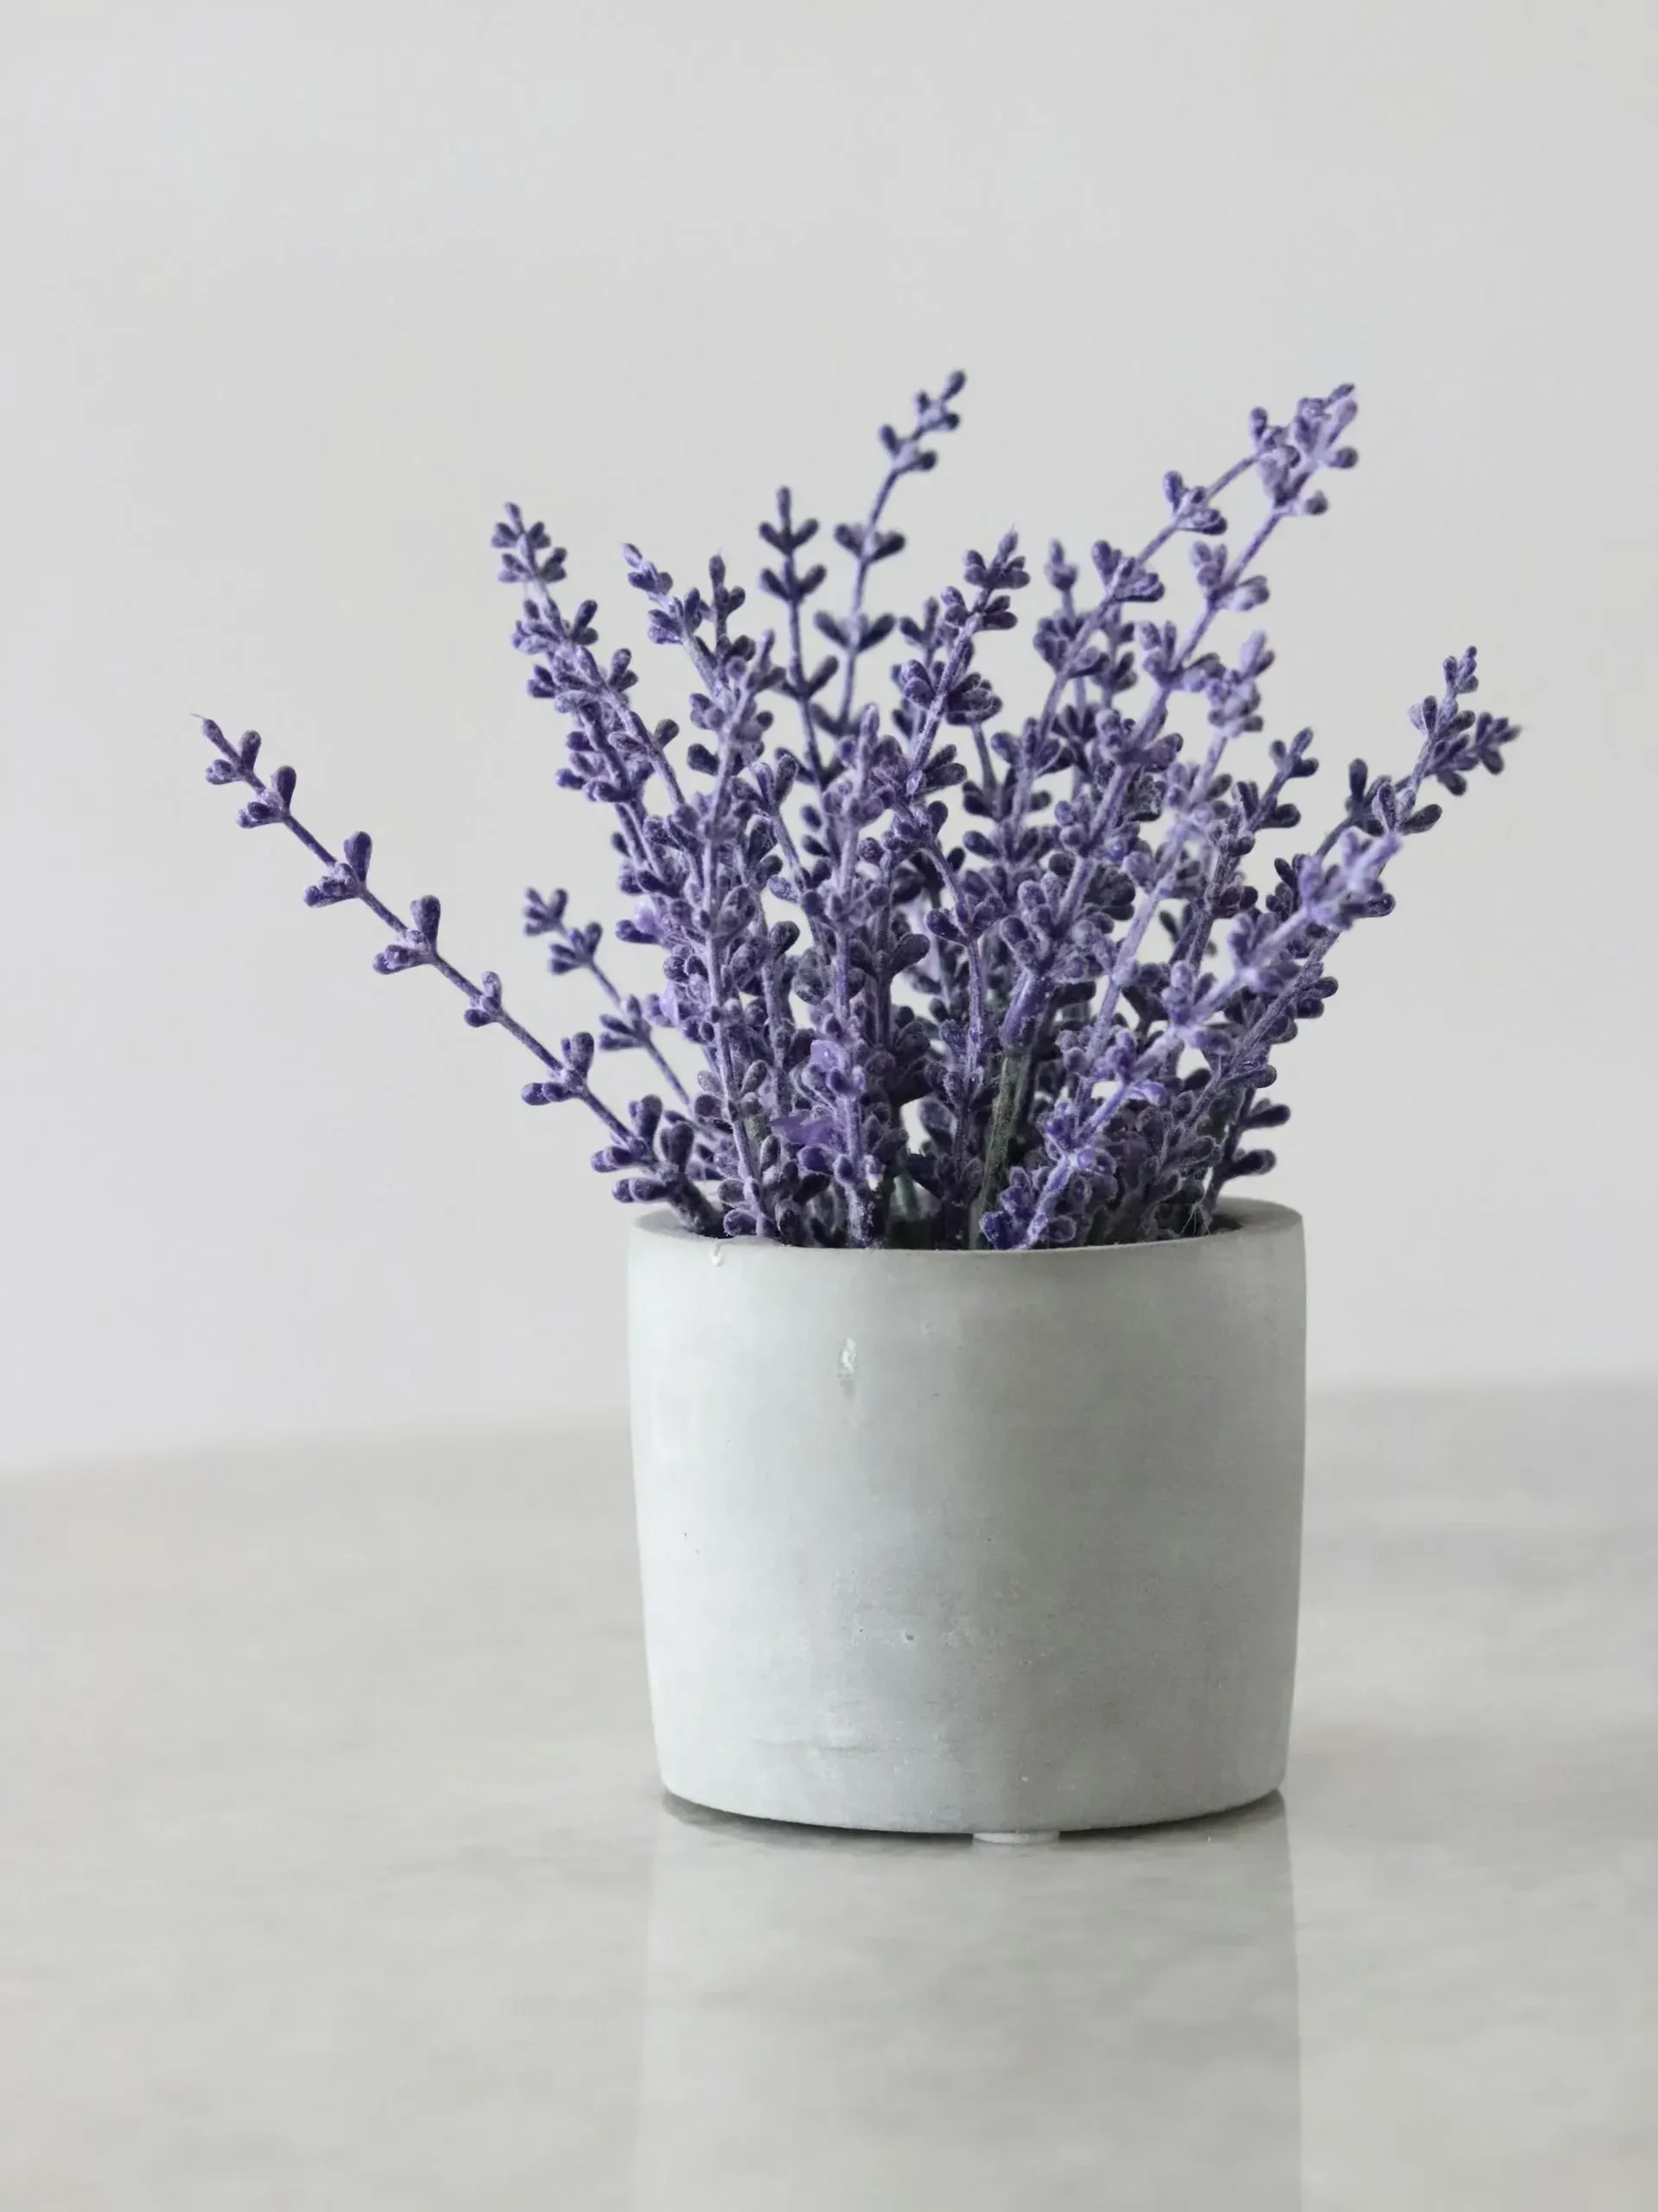 Lavender plant in a pot